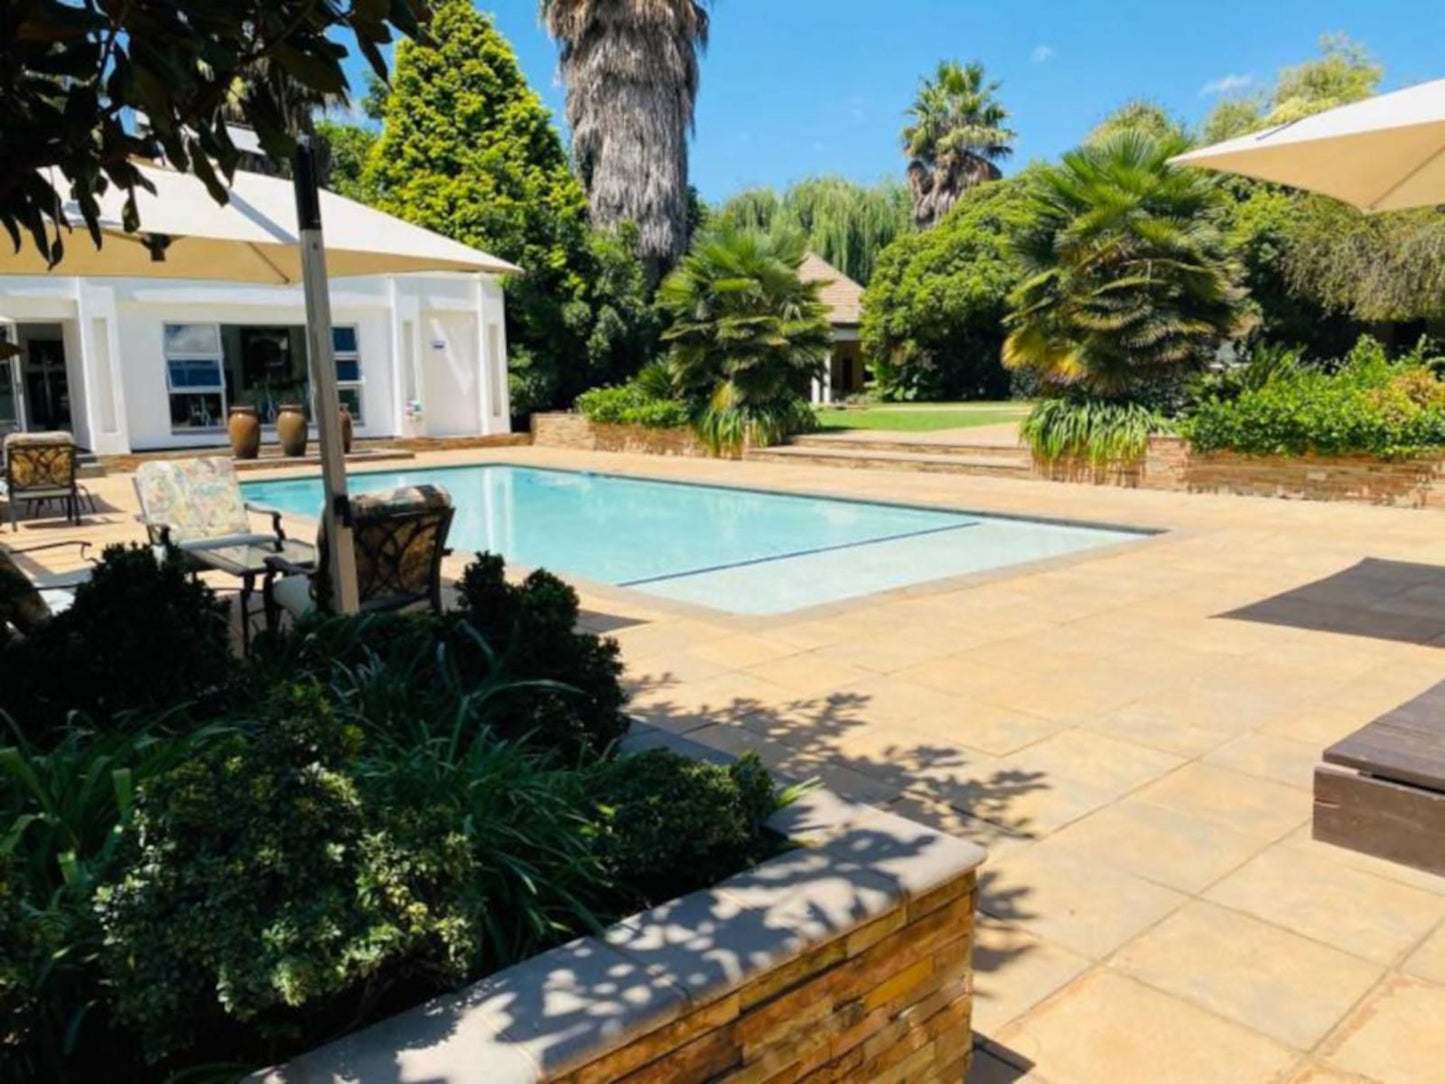 Africasky Guest House Kempton Park Johannesburg Gauteng South Africa Palm Tree, Plant, Nature, Wood, Garden, Swimming Pool